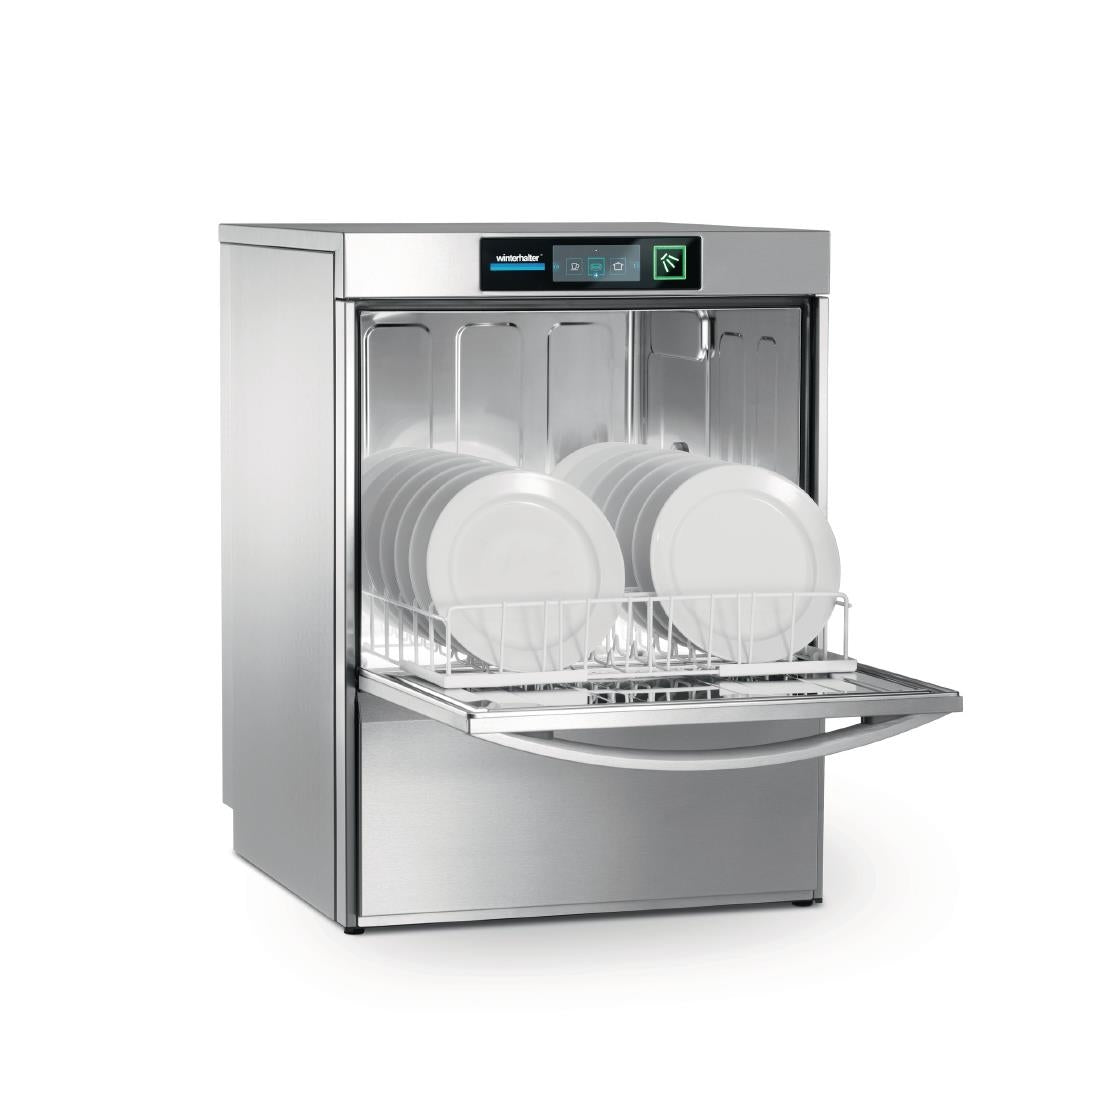 GF412 Winterhalter Undercounter Dishwasher UC-L-E JD Catering Equipment Solutions Ltd